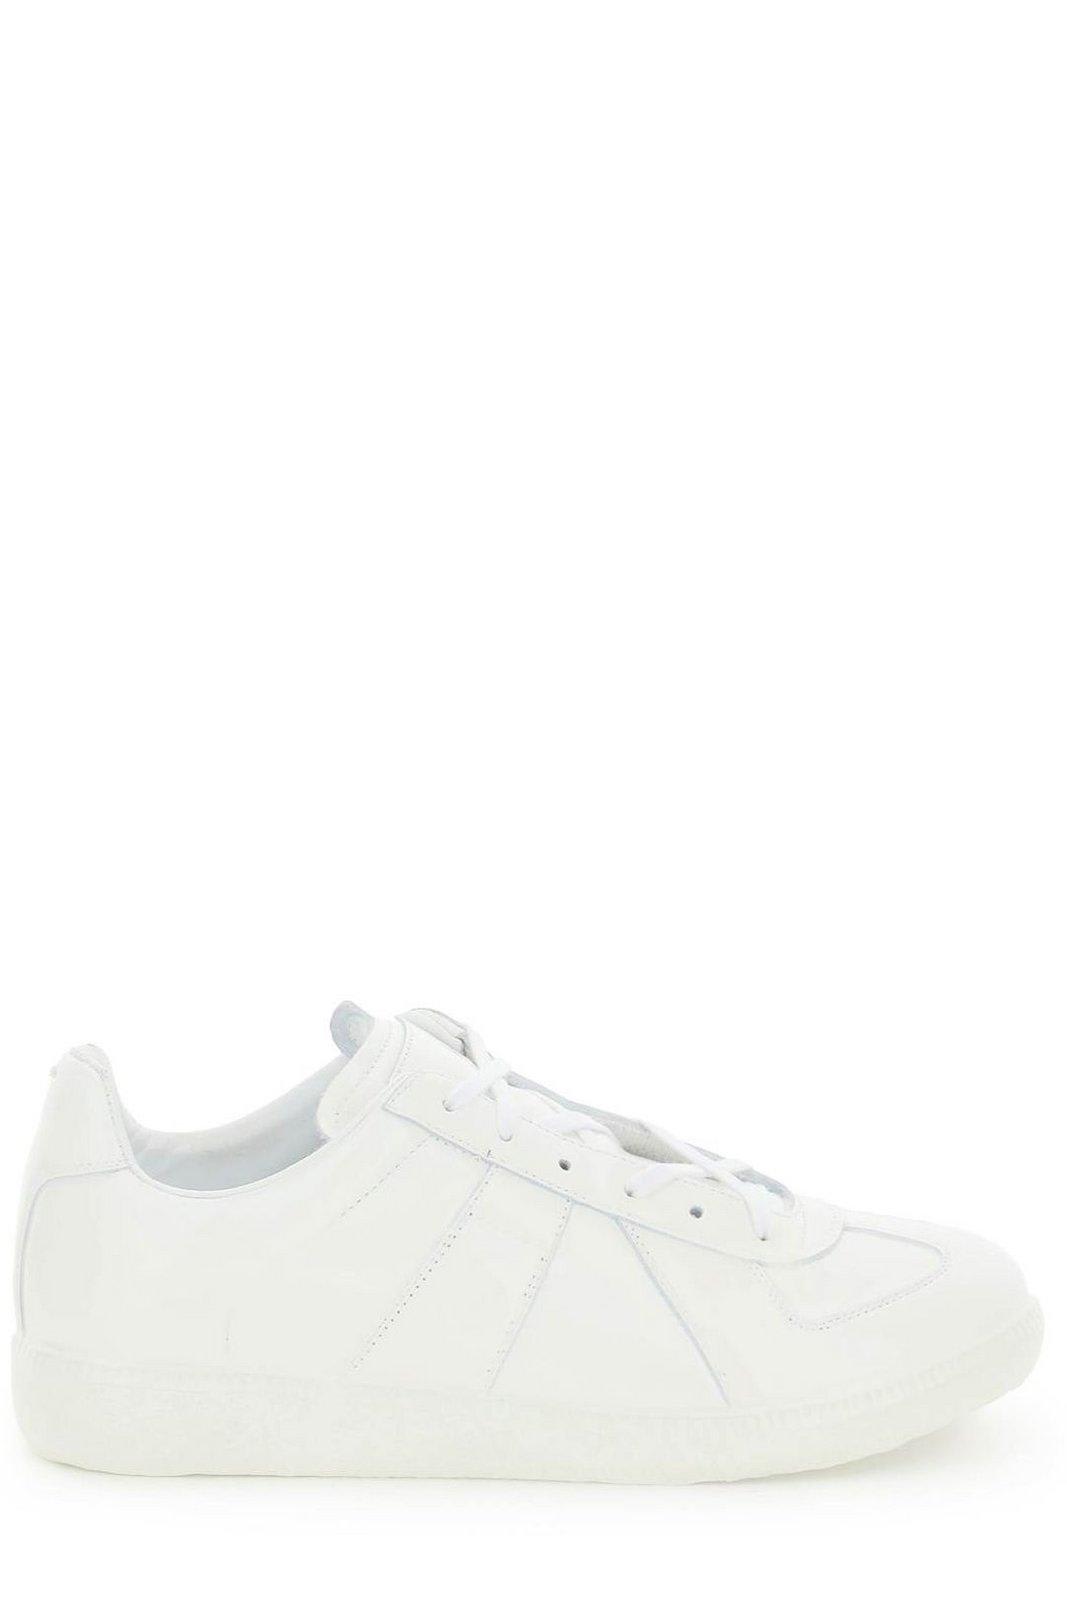 Maison Margiela Replica Low-top Sneakers In White